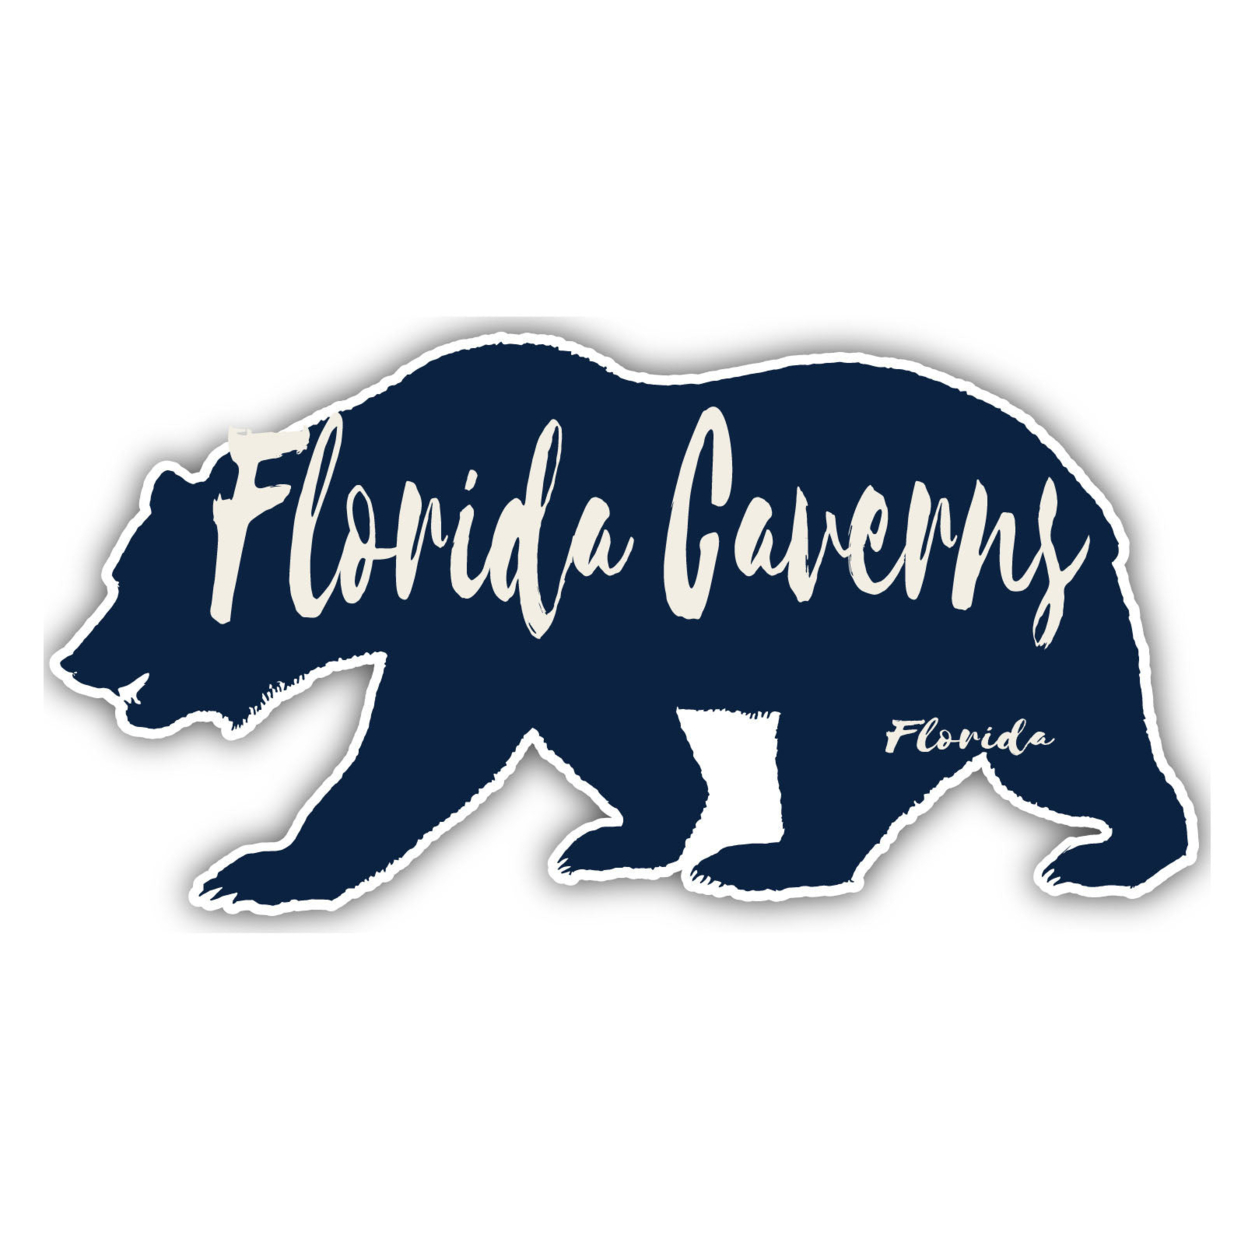 Florida Caverns Florida Souvenir Decorative Stickers (Choose Theme And Size) - 4-Pack, 2-Inch, Bear